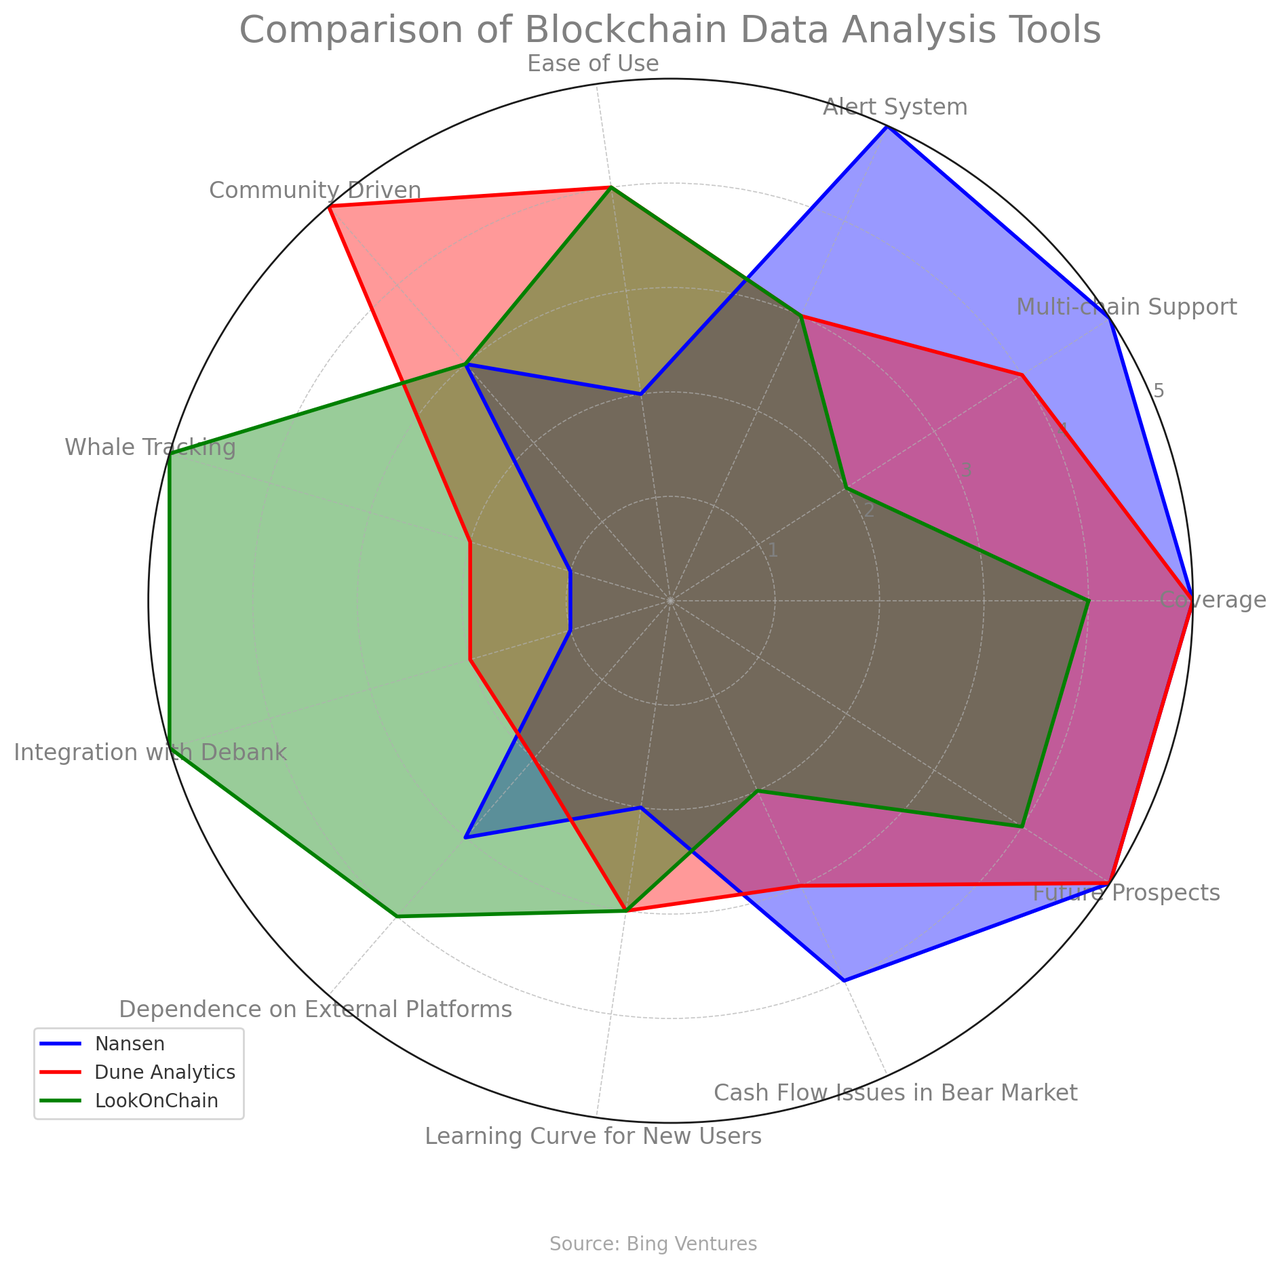 鏈上資料產品洞察：Nansen、Dune Analytics與LookOnChain比較分析